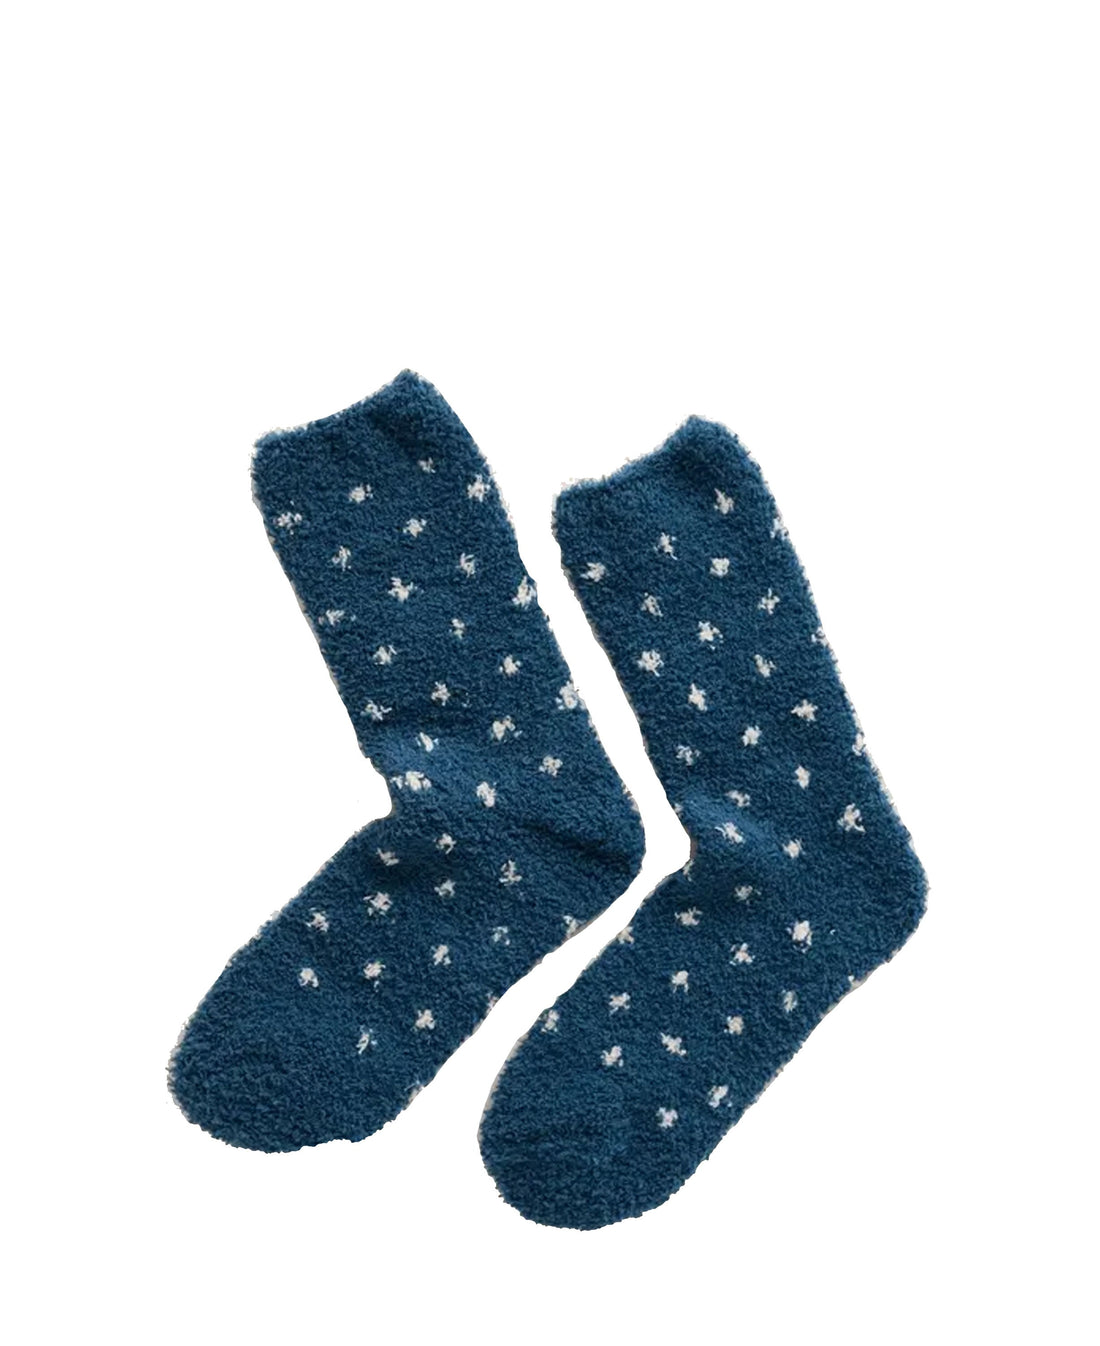 Fluffies Socks - Confetti Dark Lugger